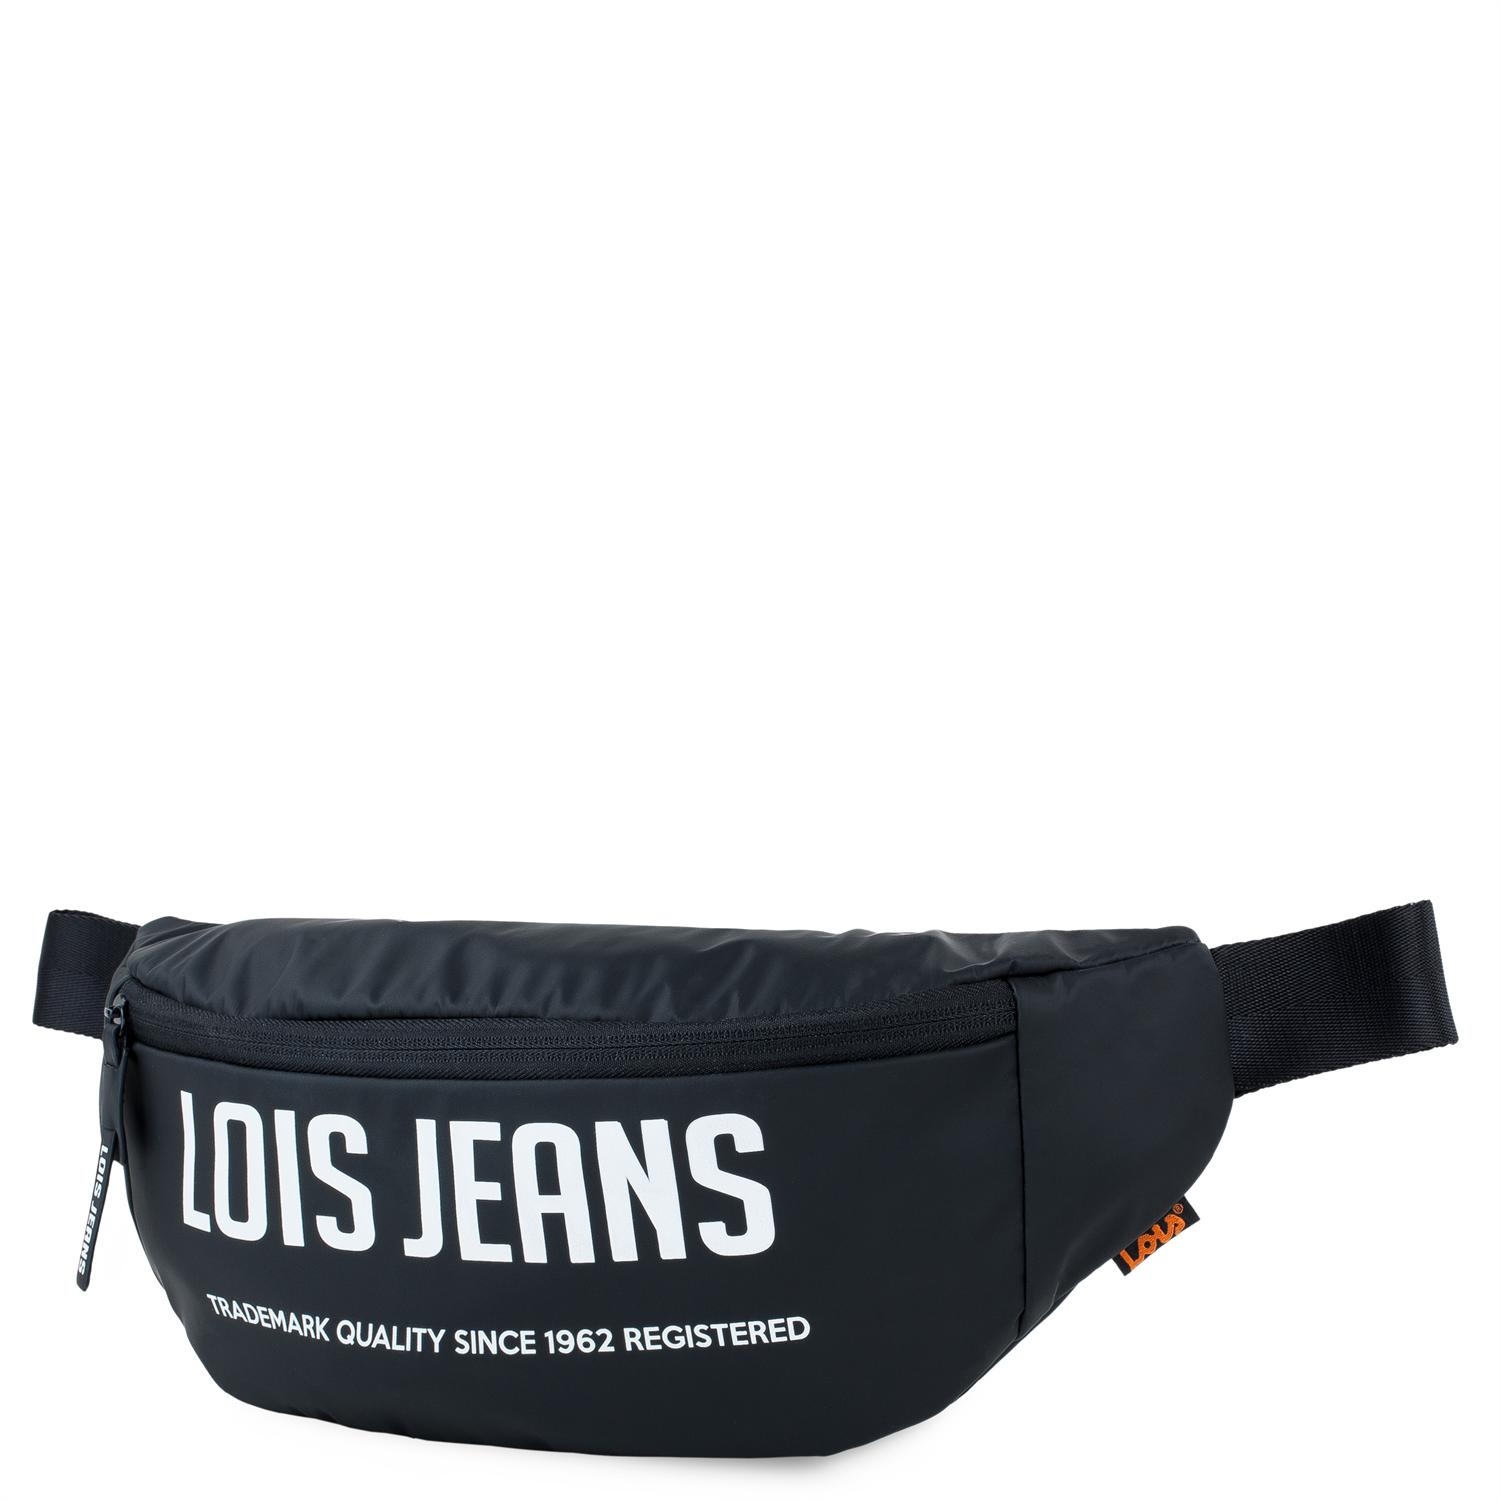 Riñonera Delta negra Lois Jeans